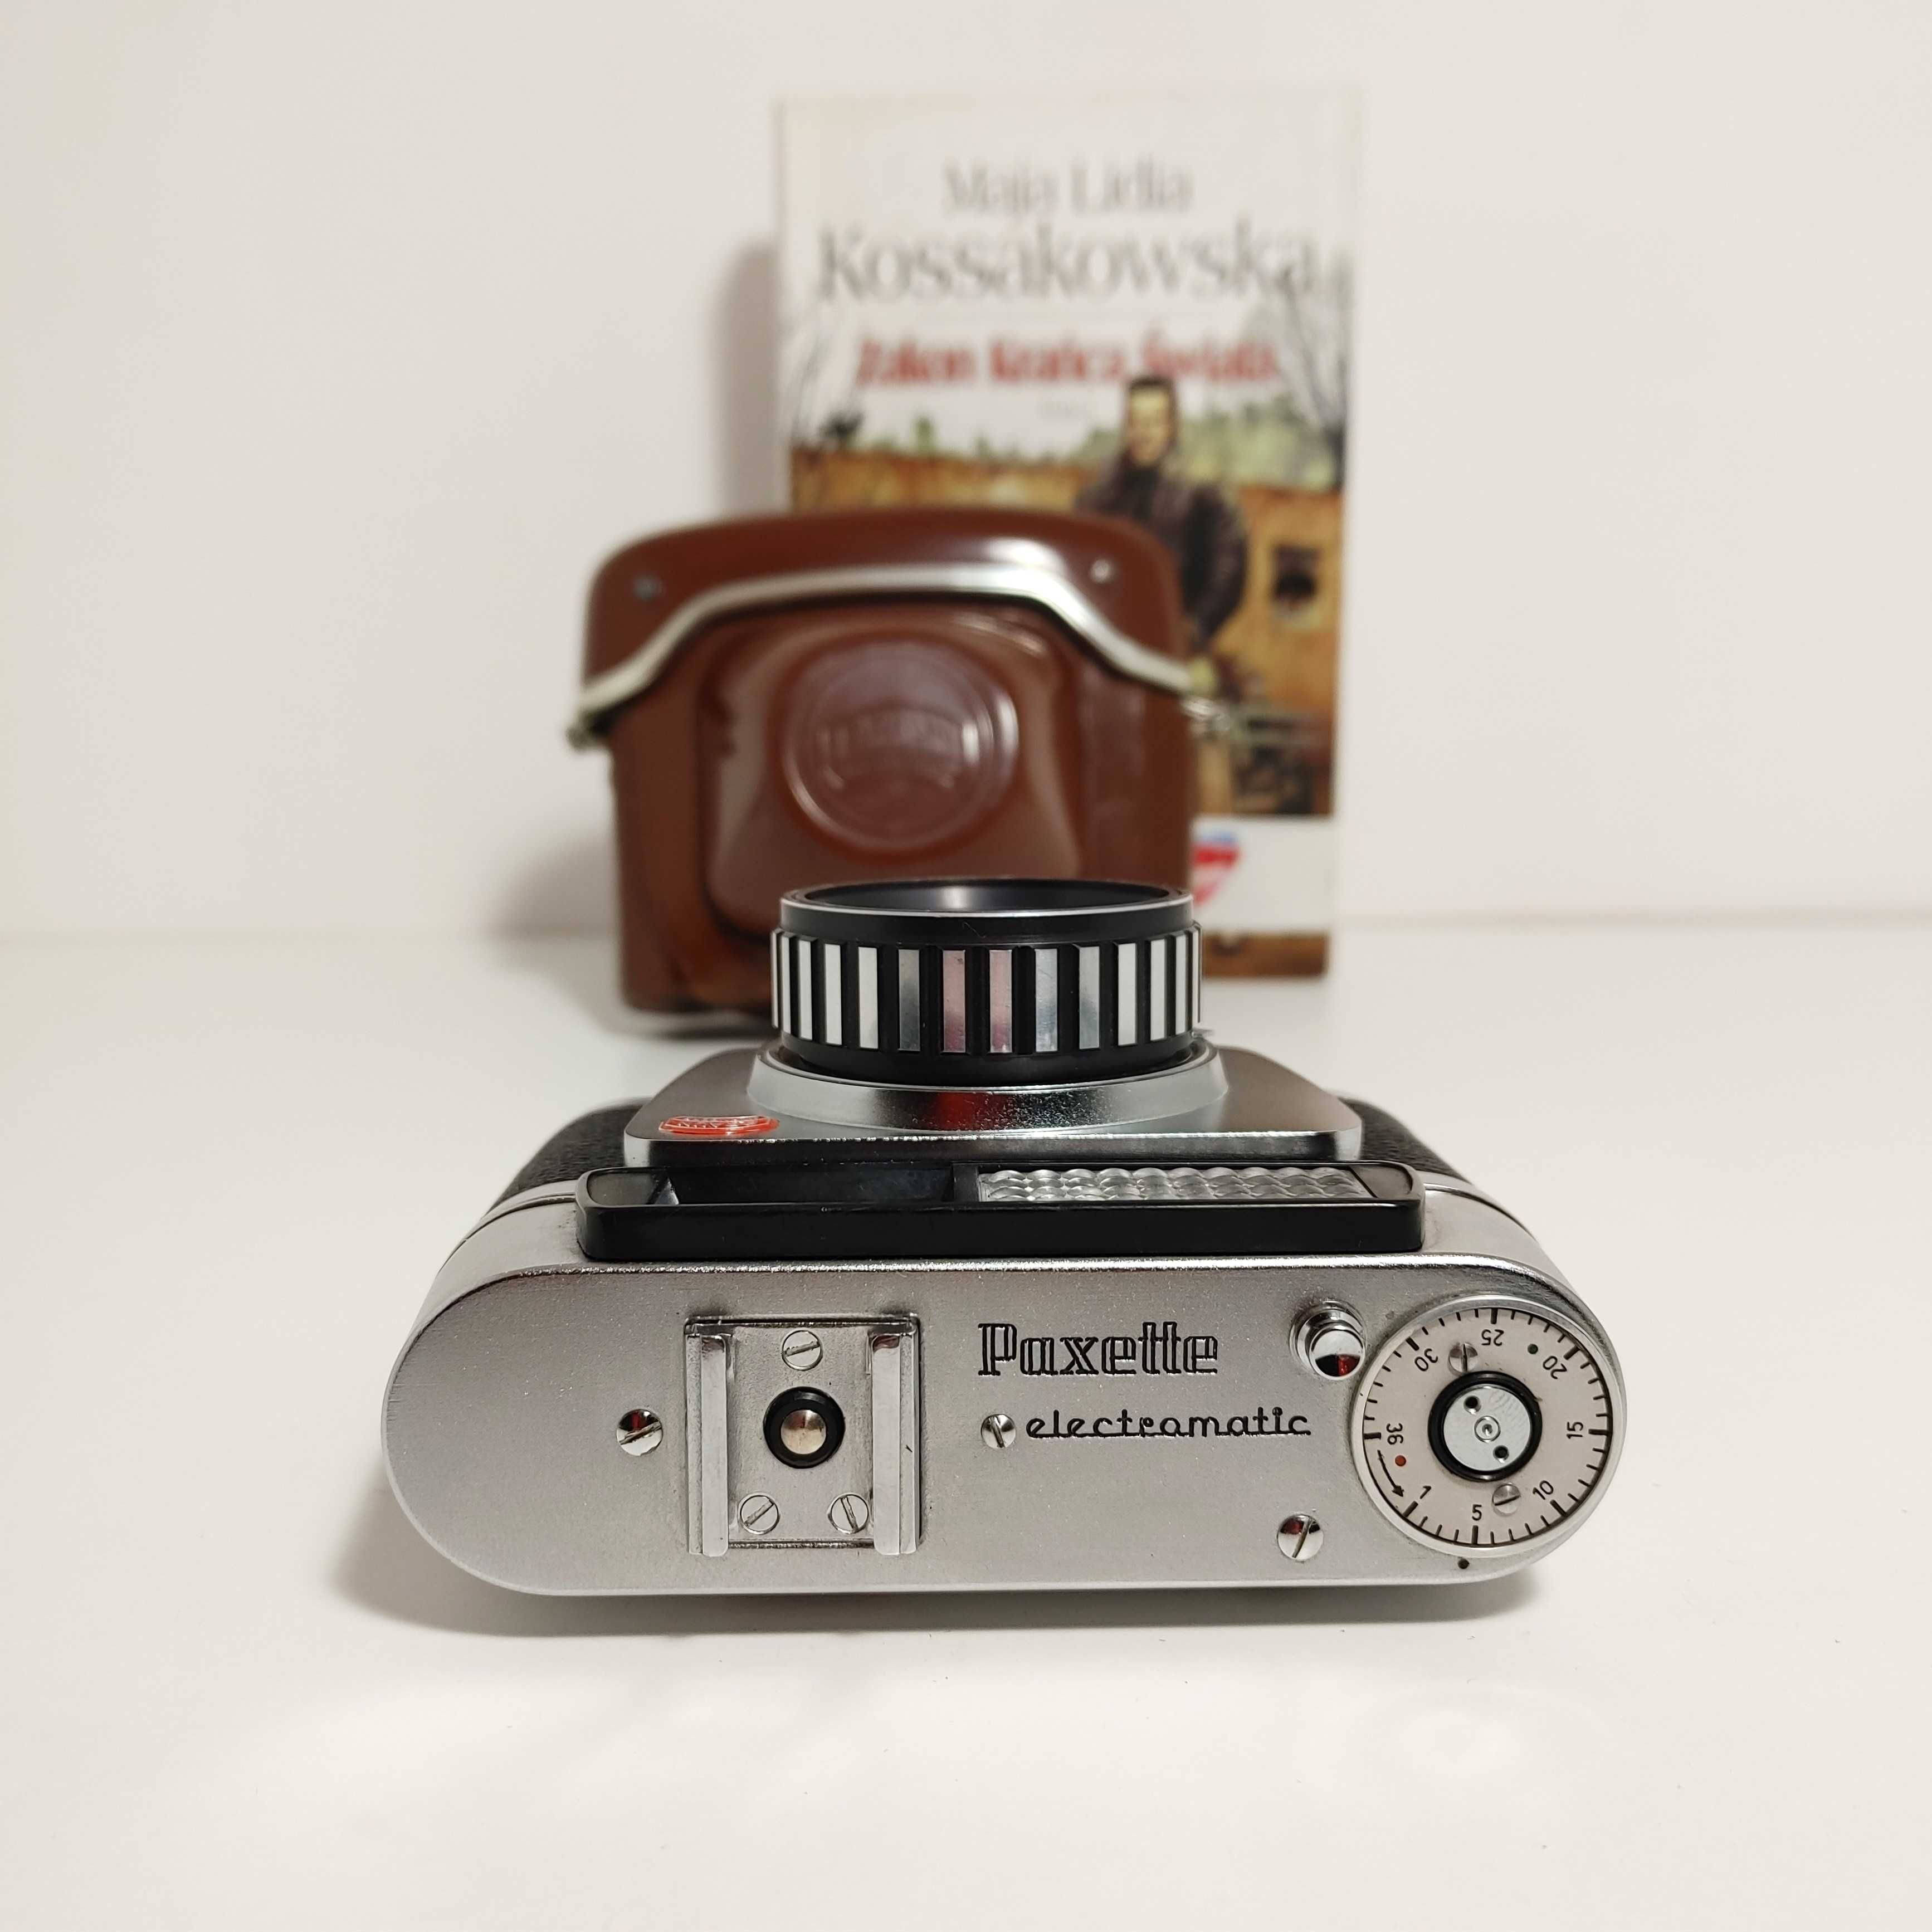 Analogowy aparat fotograficznu z 1959 roku Braun Paxette Electromatic